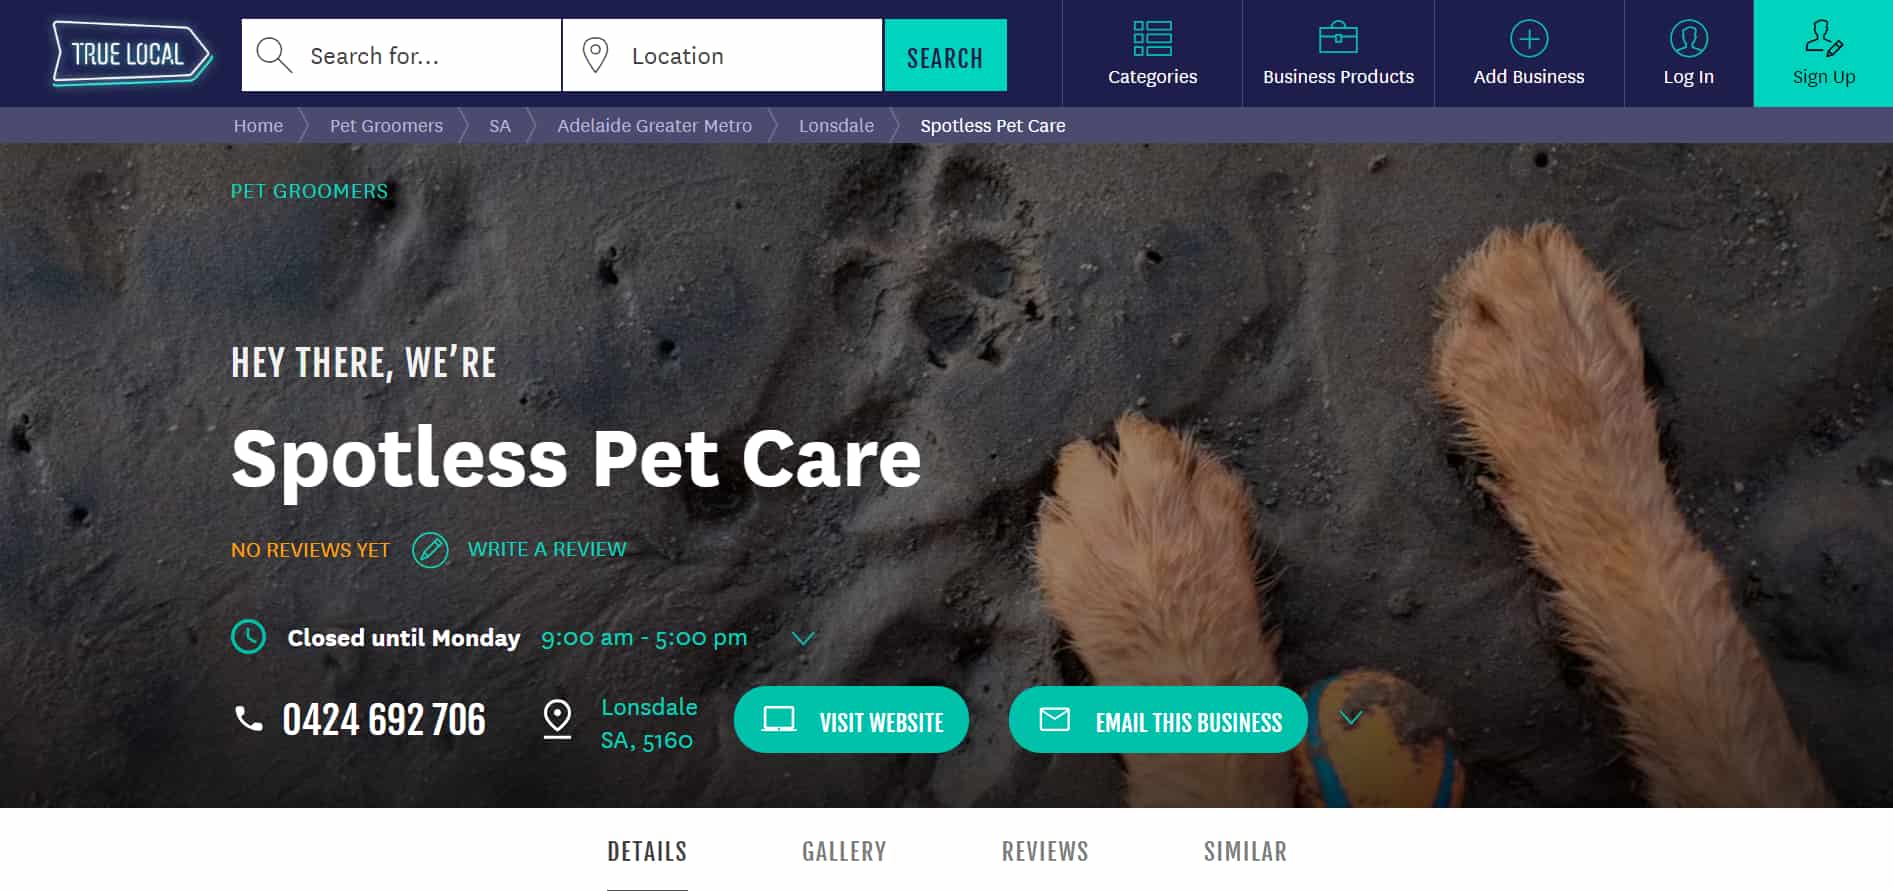 Spotless Pet Care